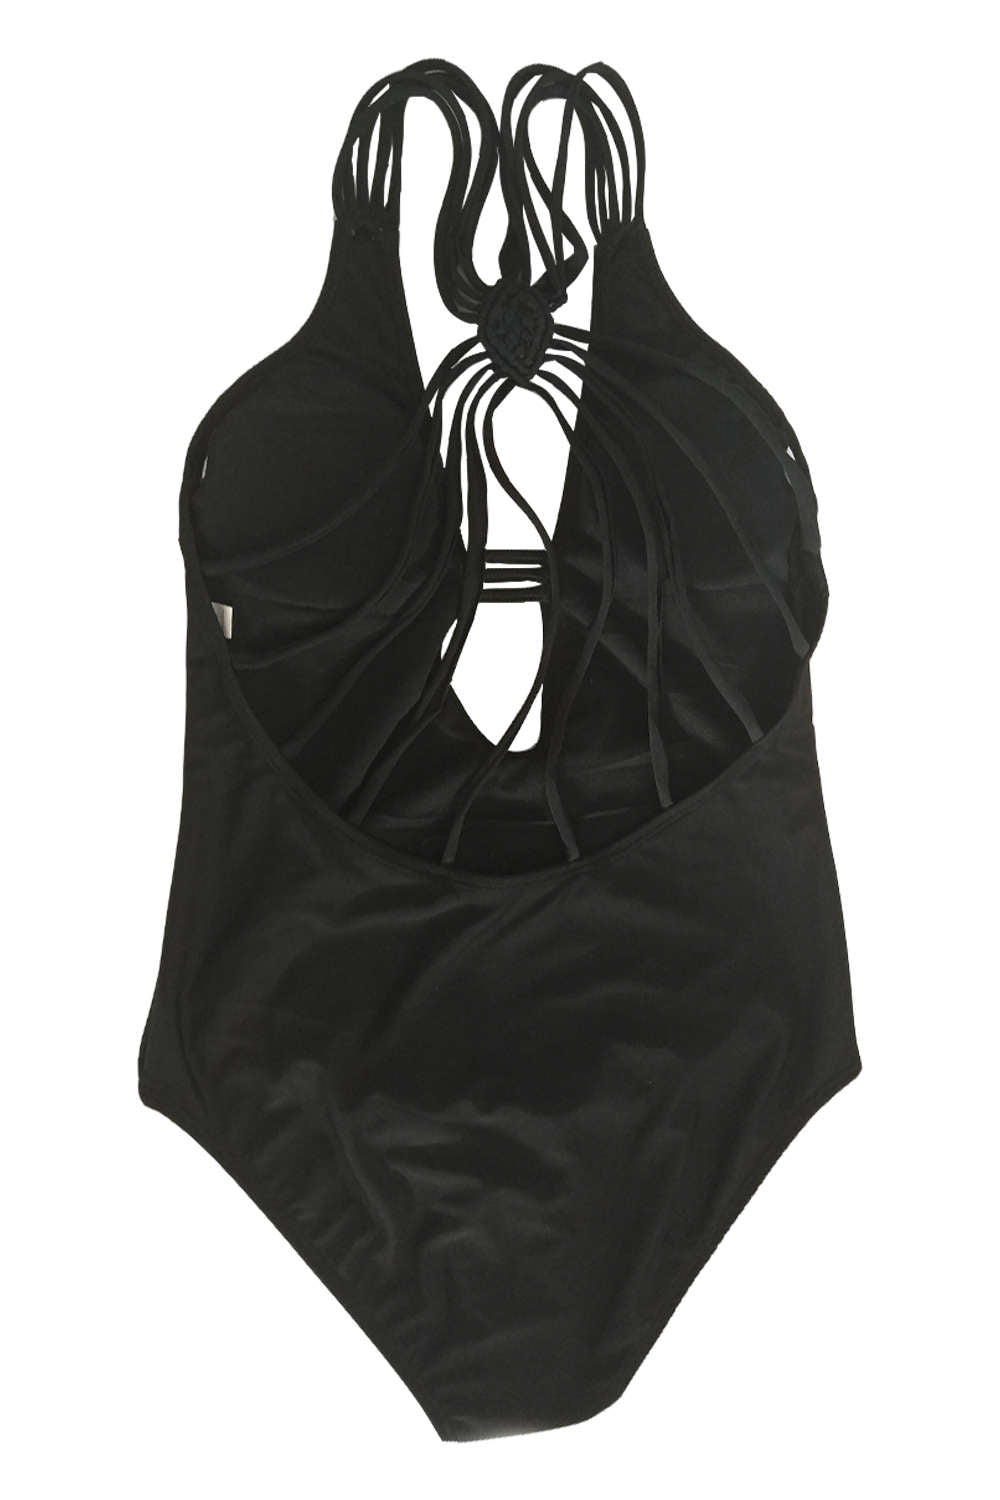 Iyasson Elegant Black Deep V-neckline One-piece Swimsuit With Handmade Braided Ties